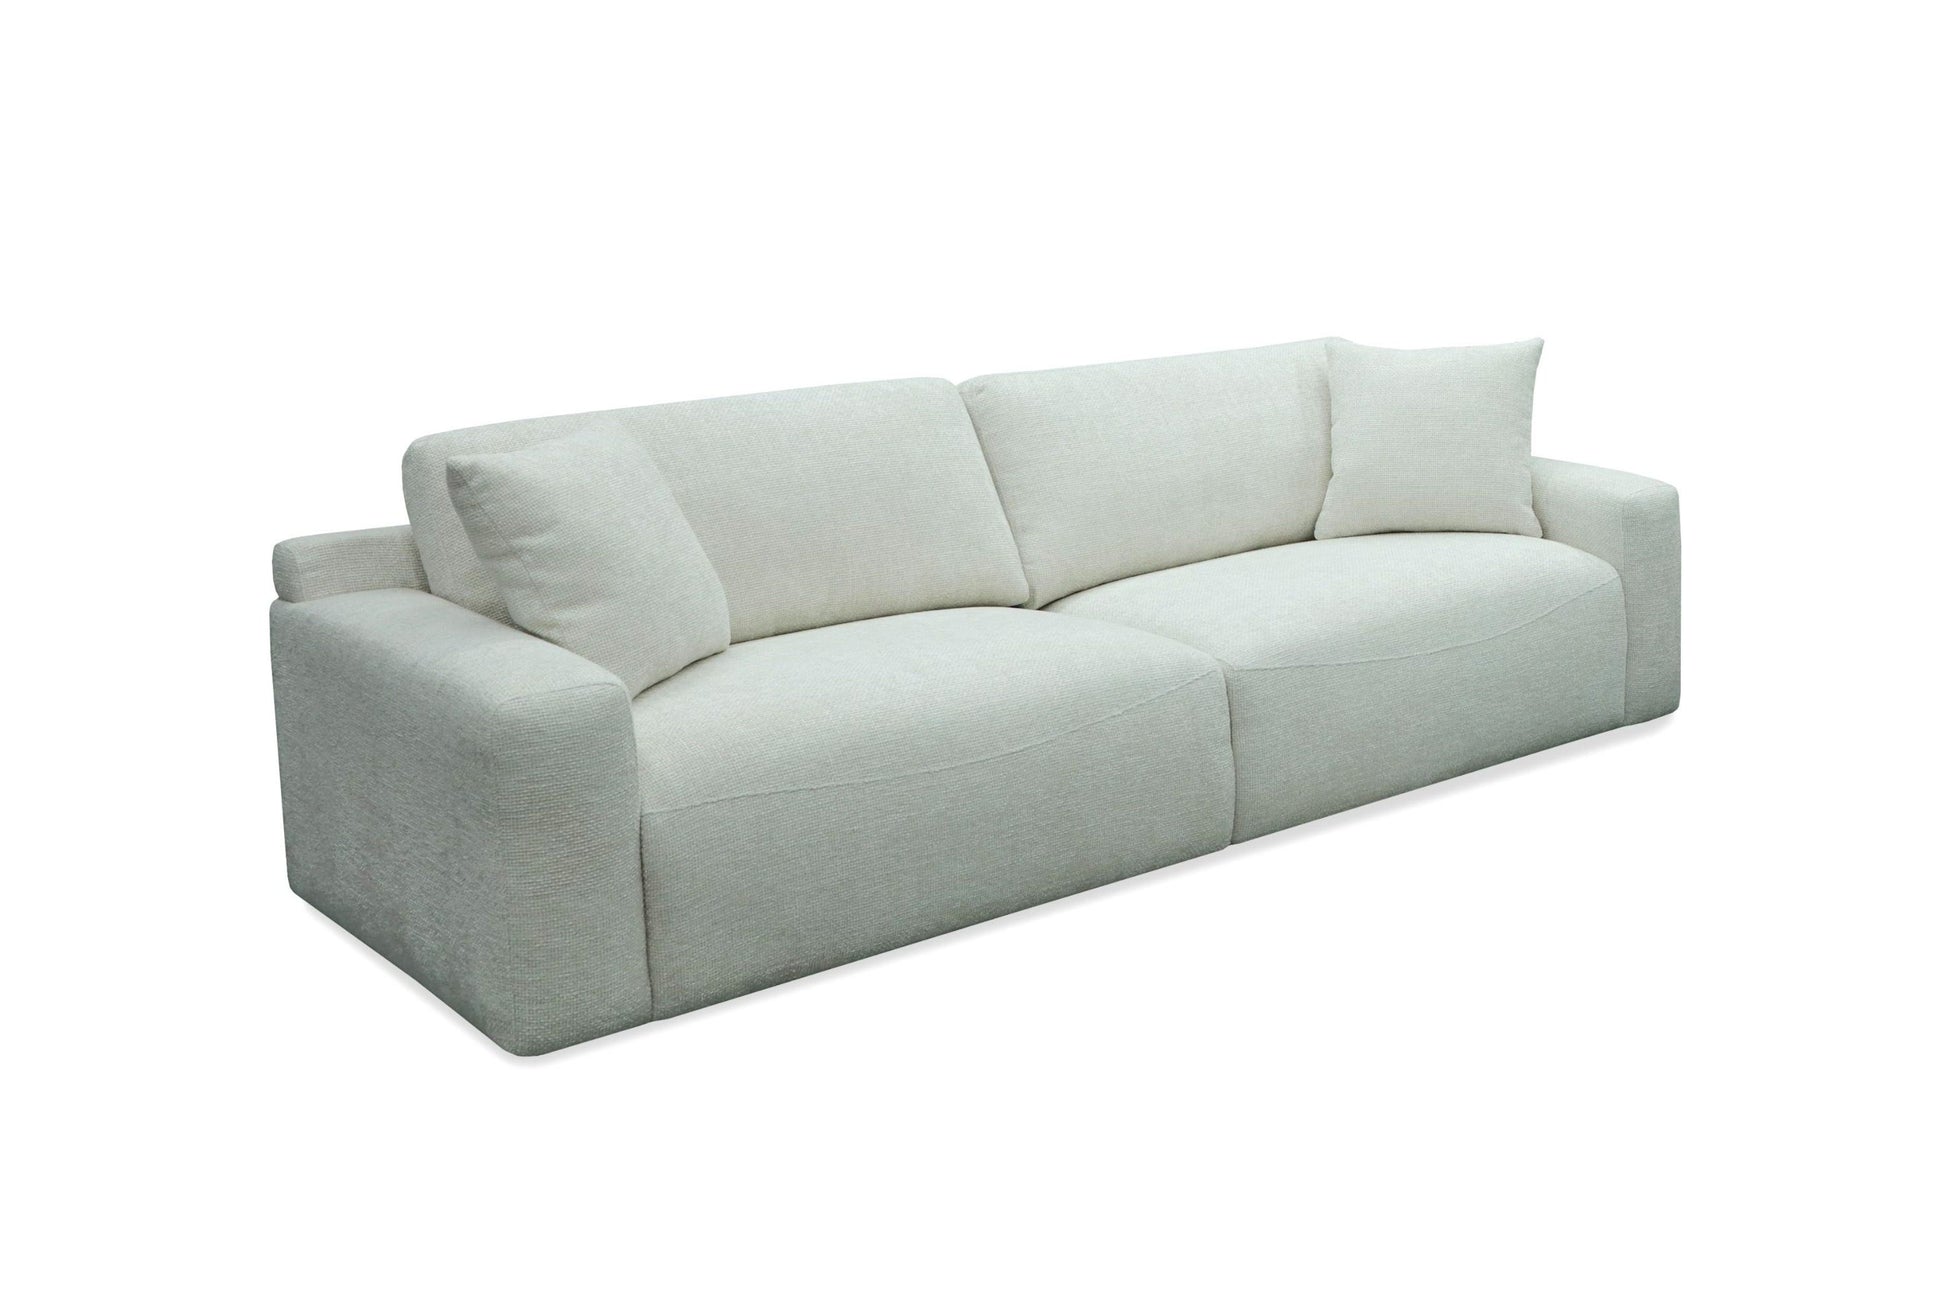 Divani Casa Gloria Modern Comfortable White Fabric Sofa 1